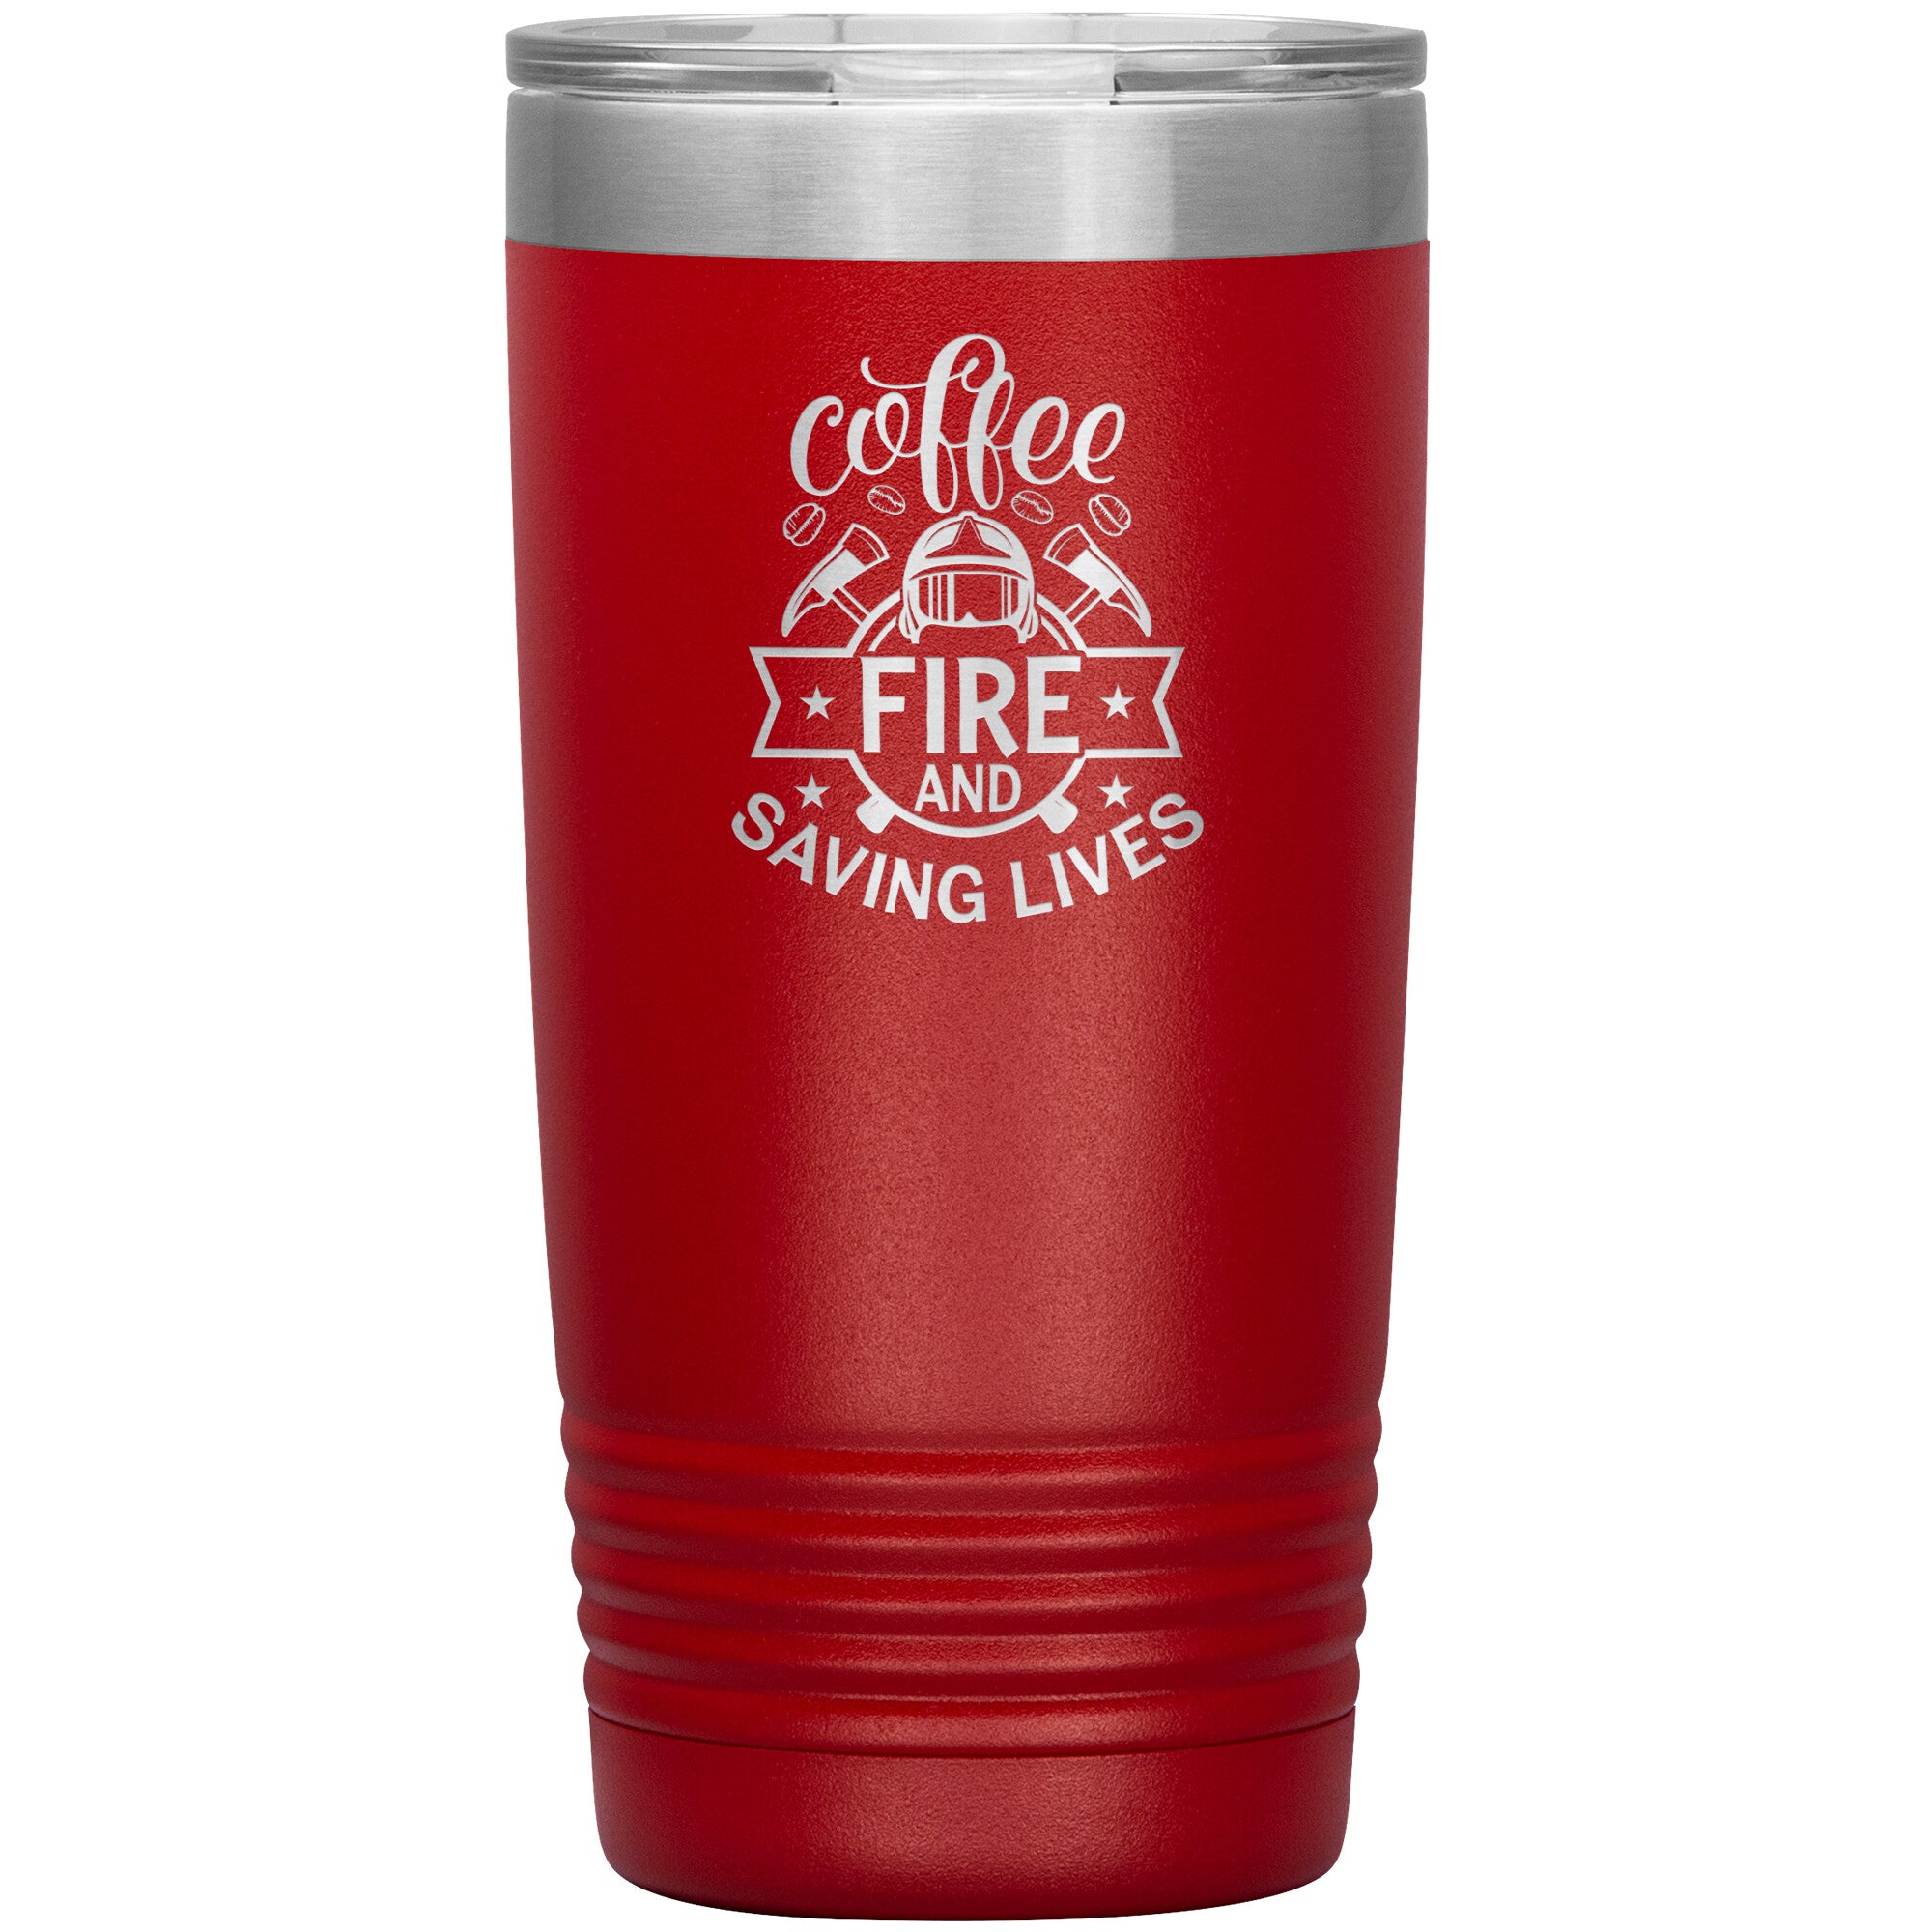 Coffee fire and saving lives